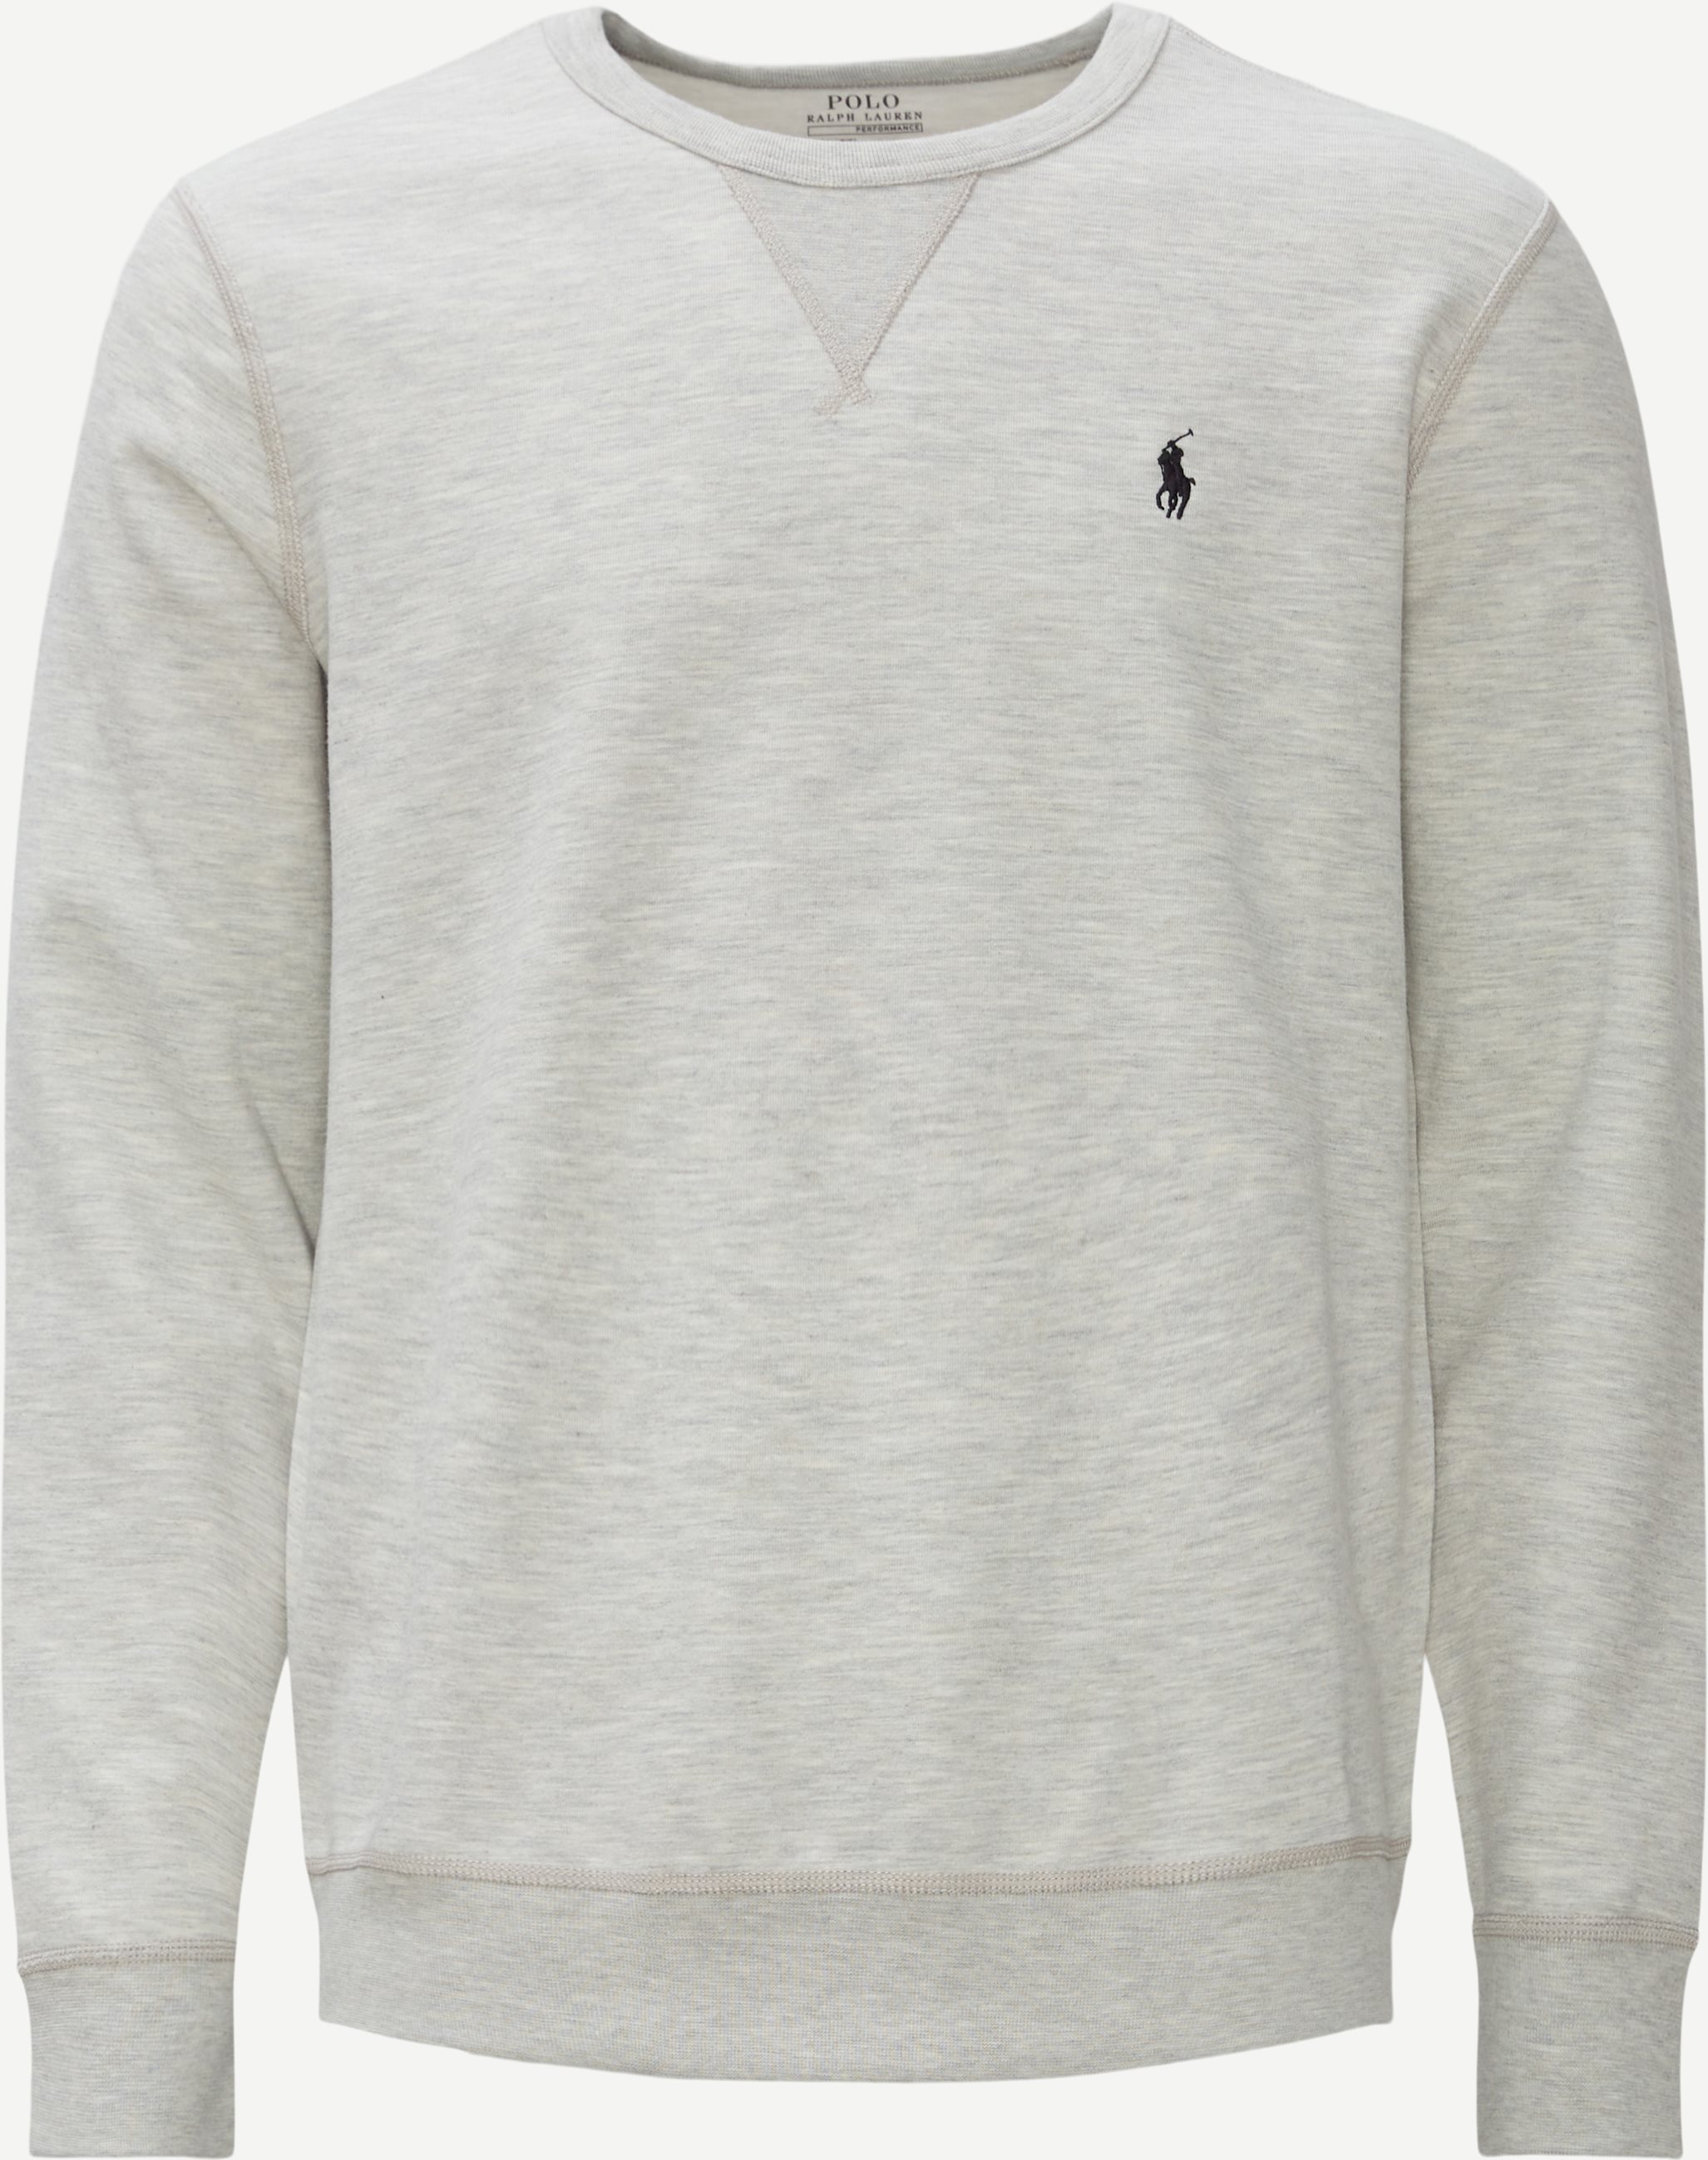 Crewneck -tröja - Sweatshirts - Regular fit - Grå